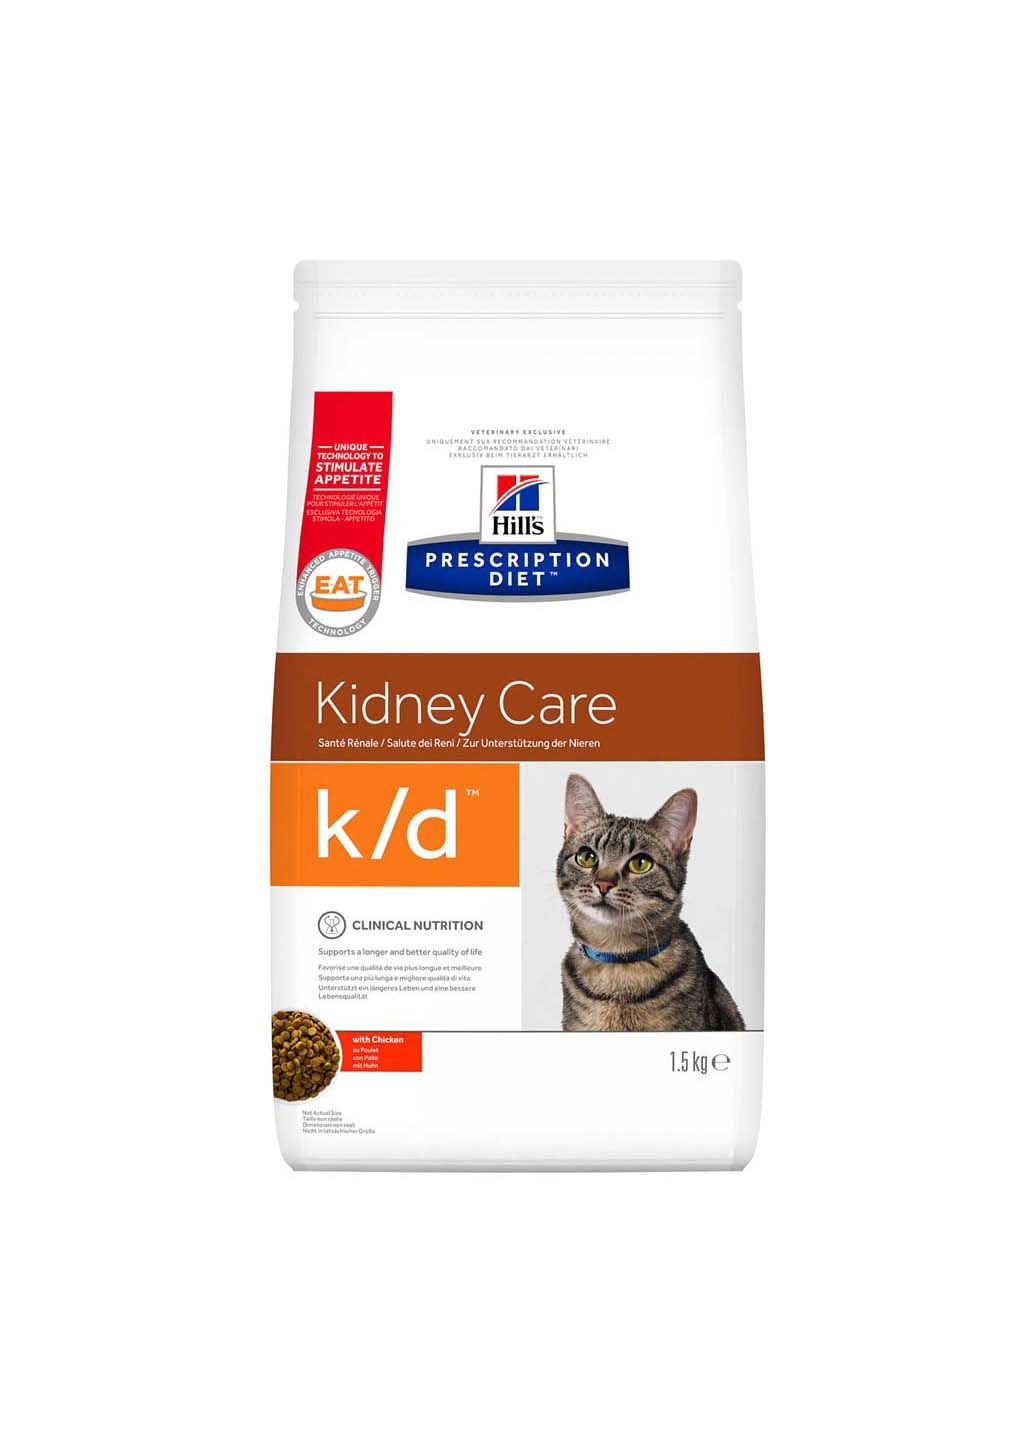 Сухой корм для кошек Prescription Diet Feline k/d 1.5 кг HILLS (286473017)